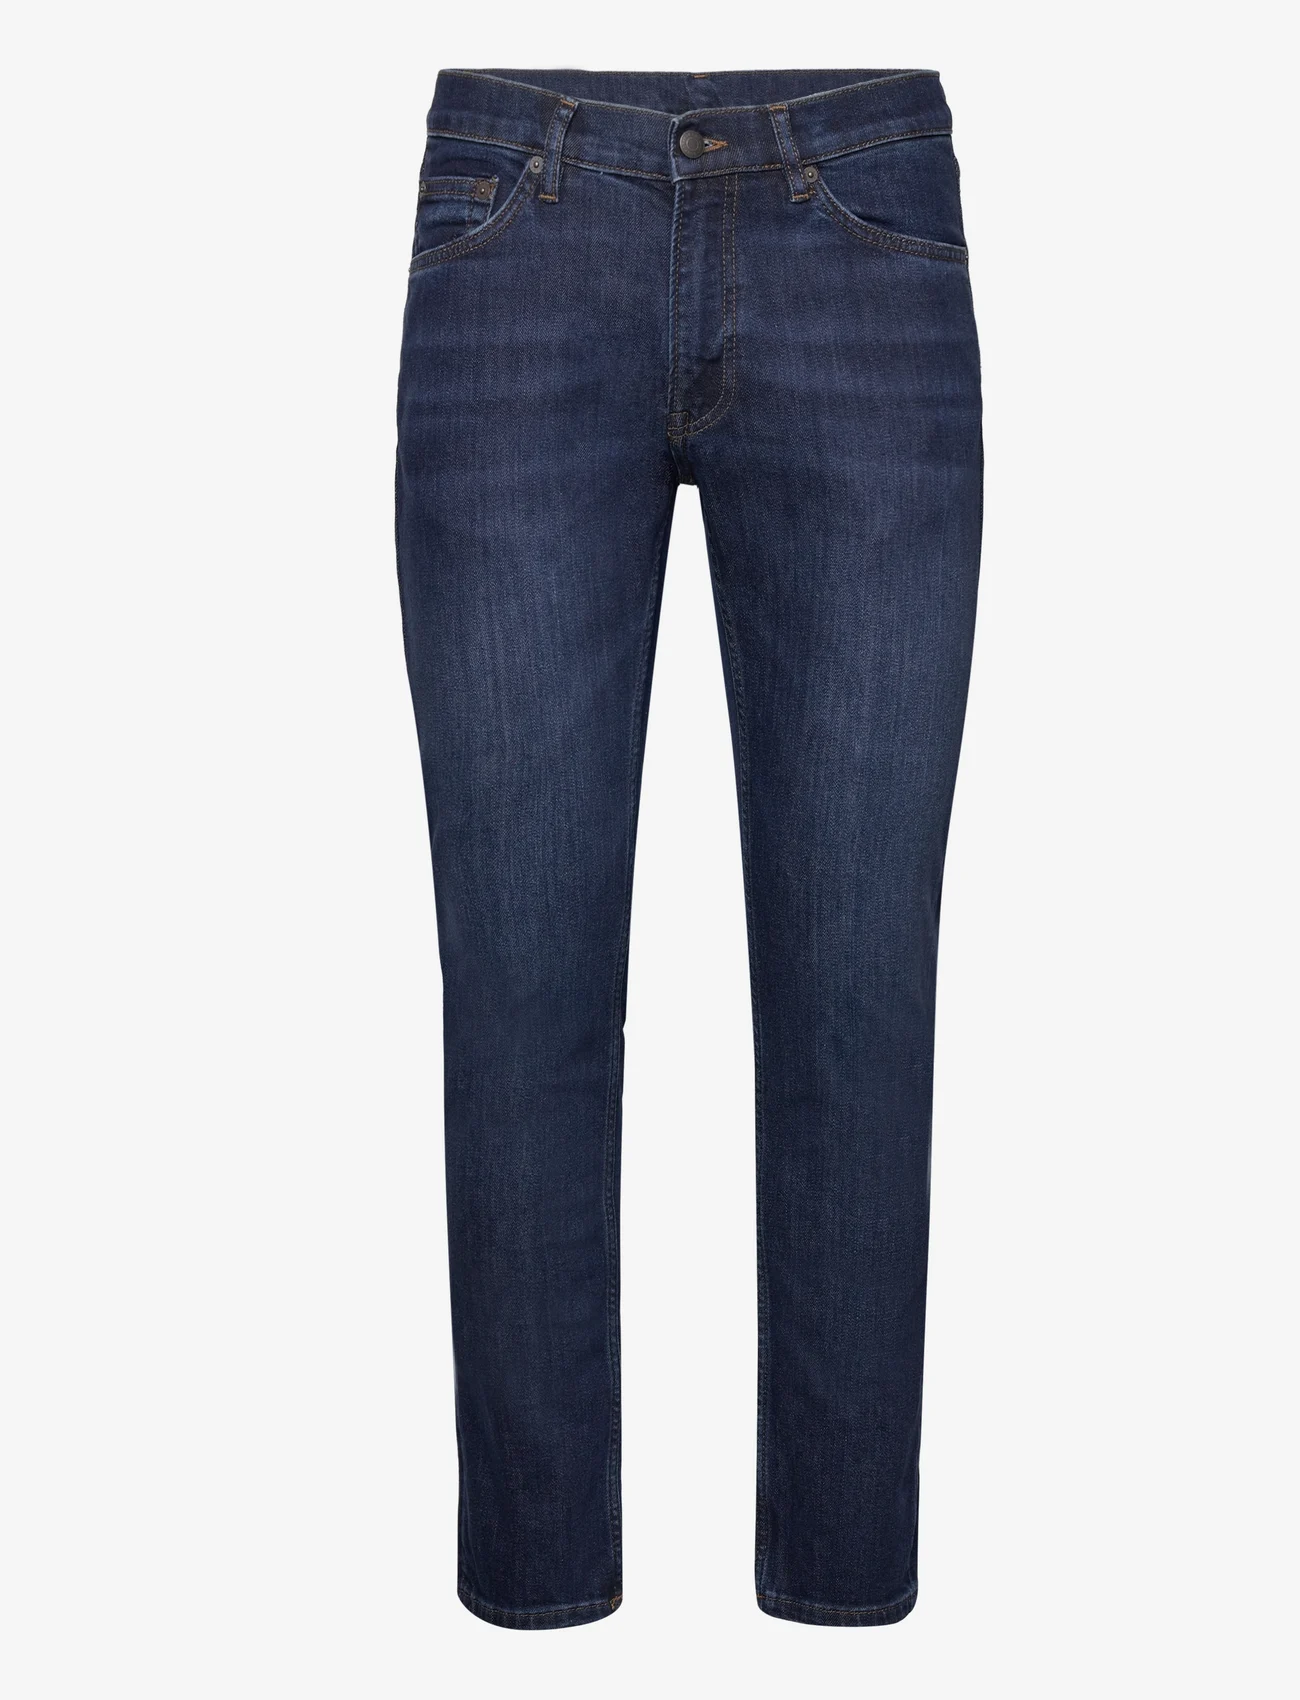 GANT - SLIM GANT JEANS - slim jeans - dark blue worn in - 1